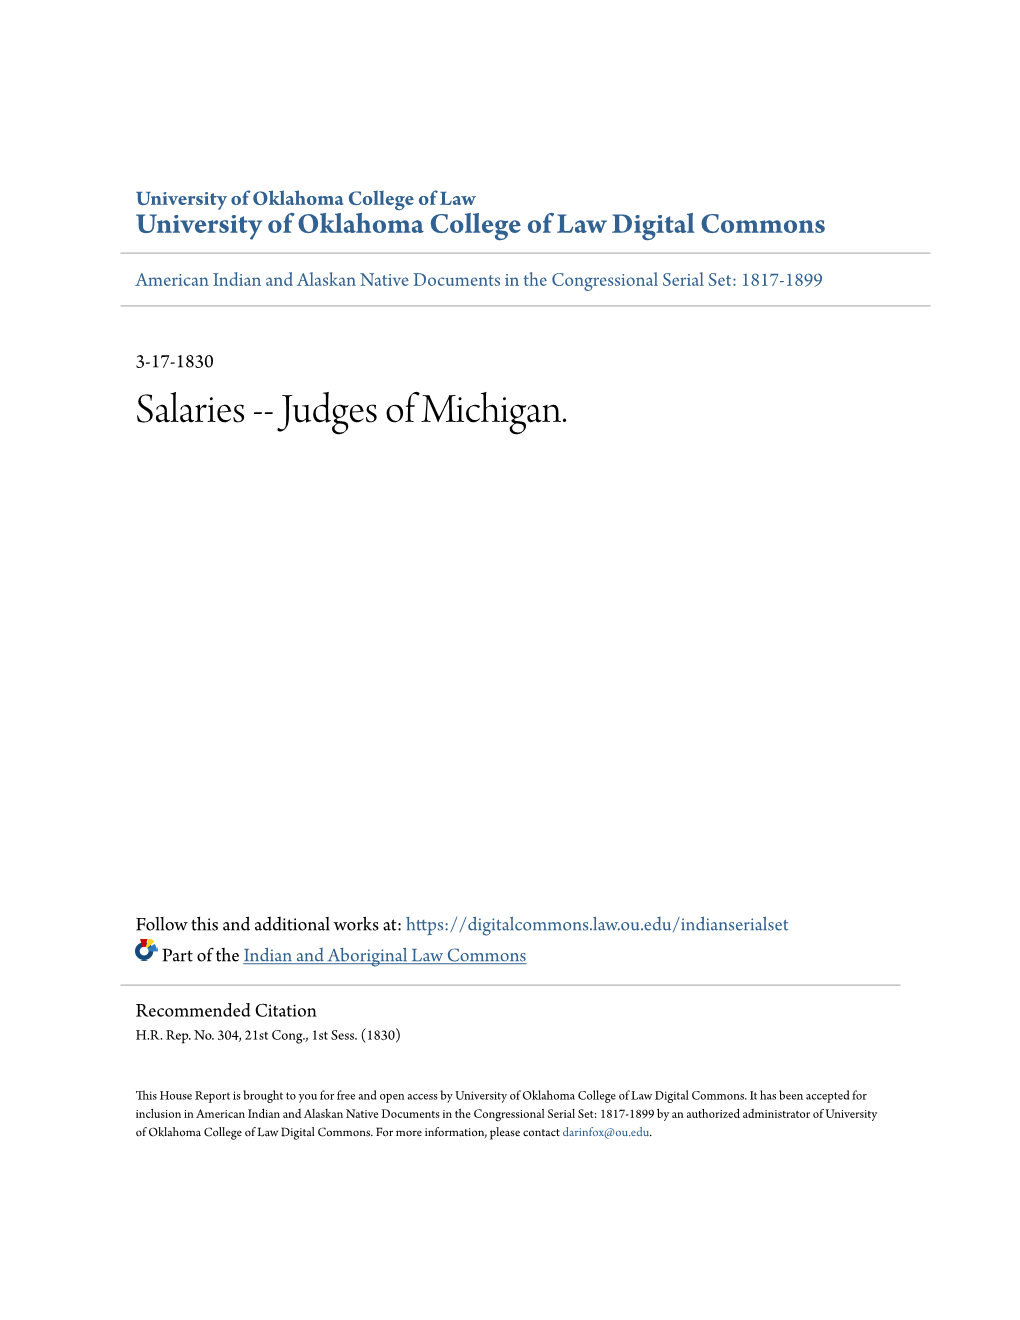 Salaries -- Judges of Michigan